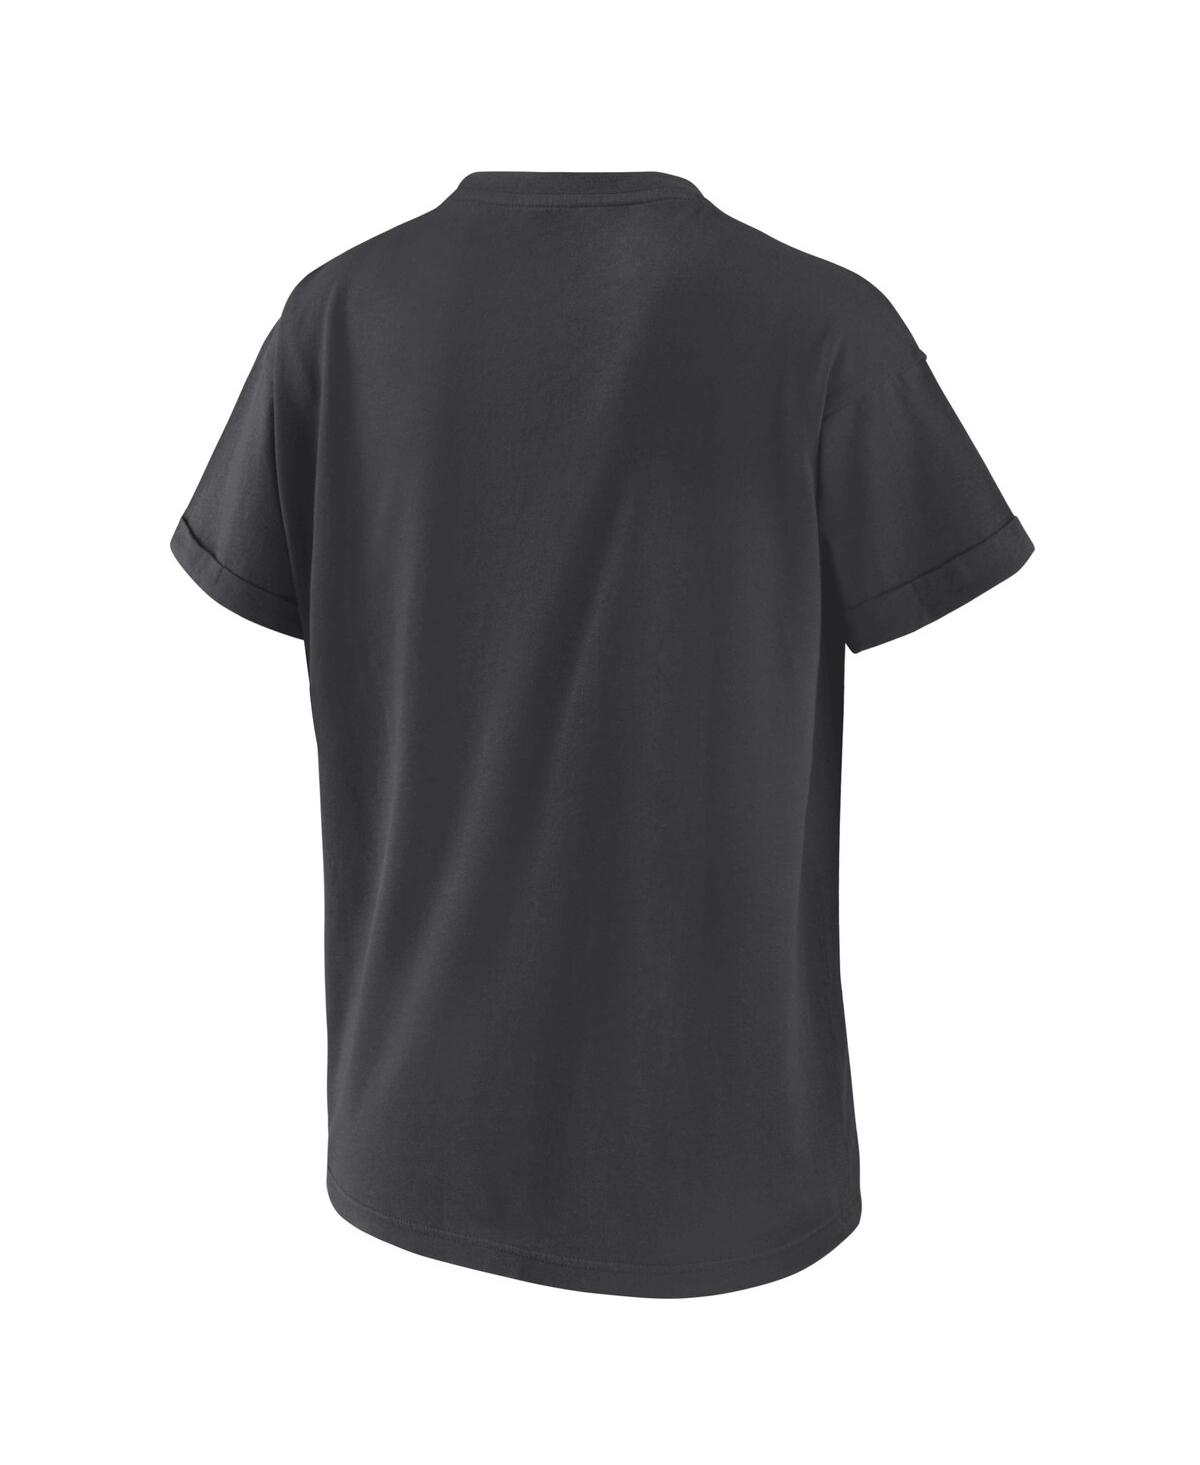 Shop Wear By Erin Andrews Women's  Charcoal Washington Nationals Oversized Boyfriend T-shirt